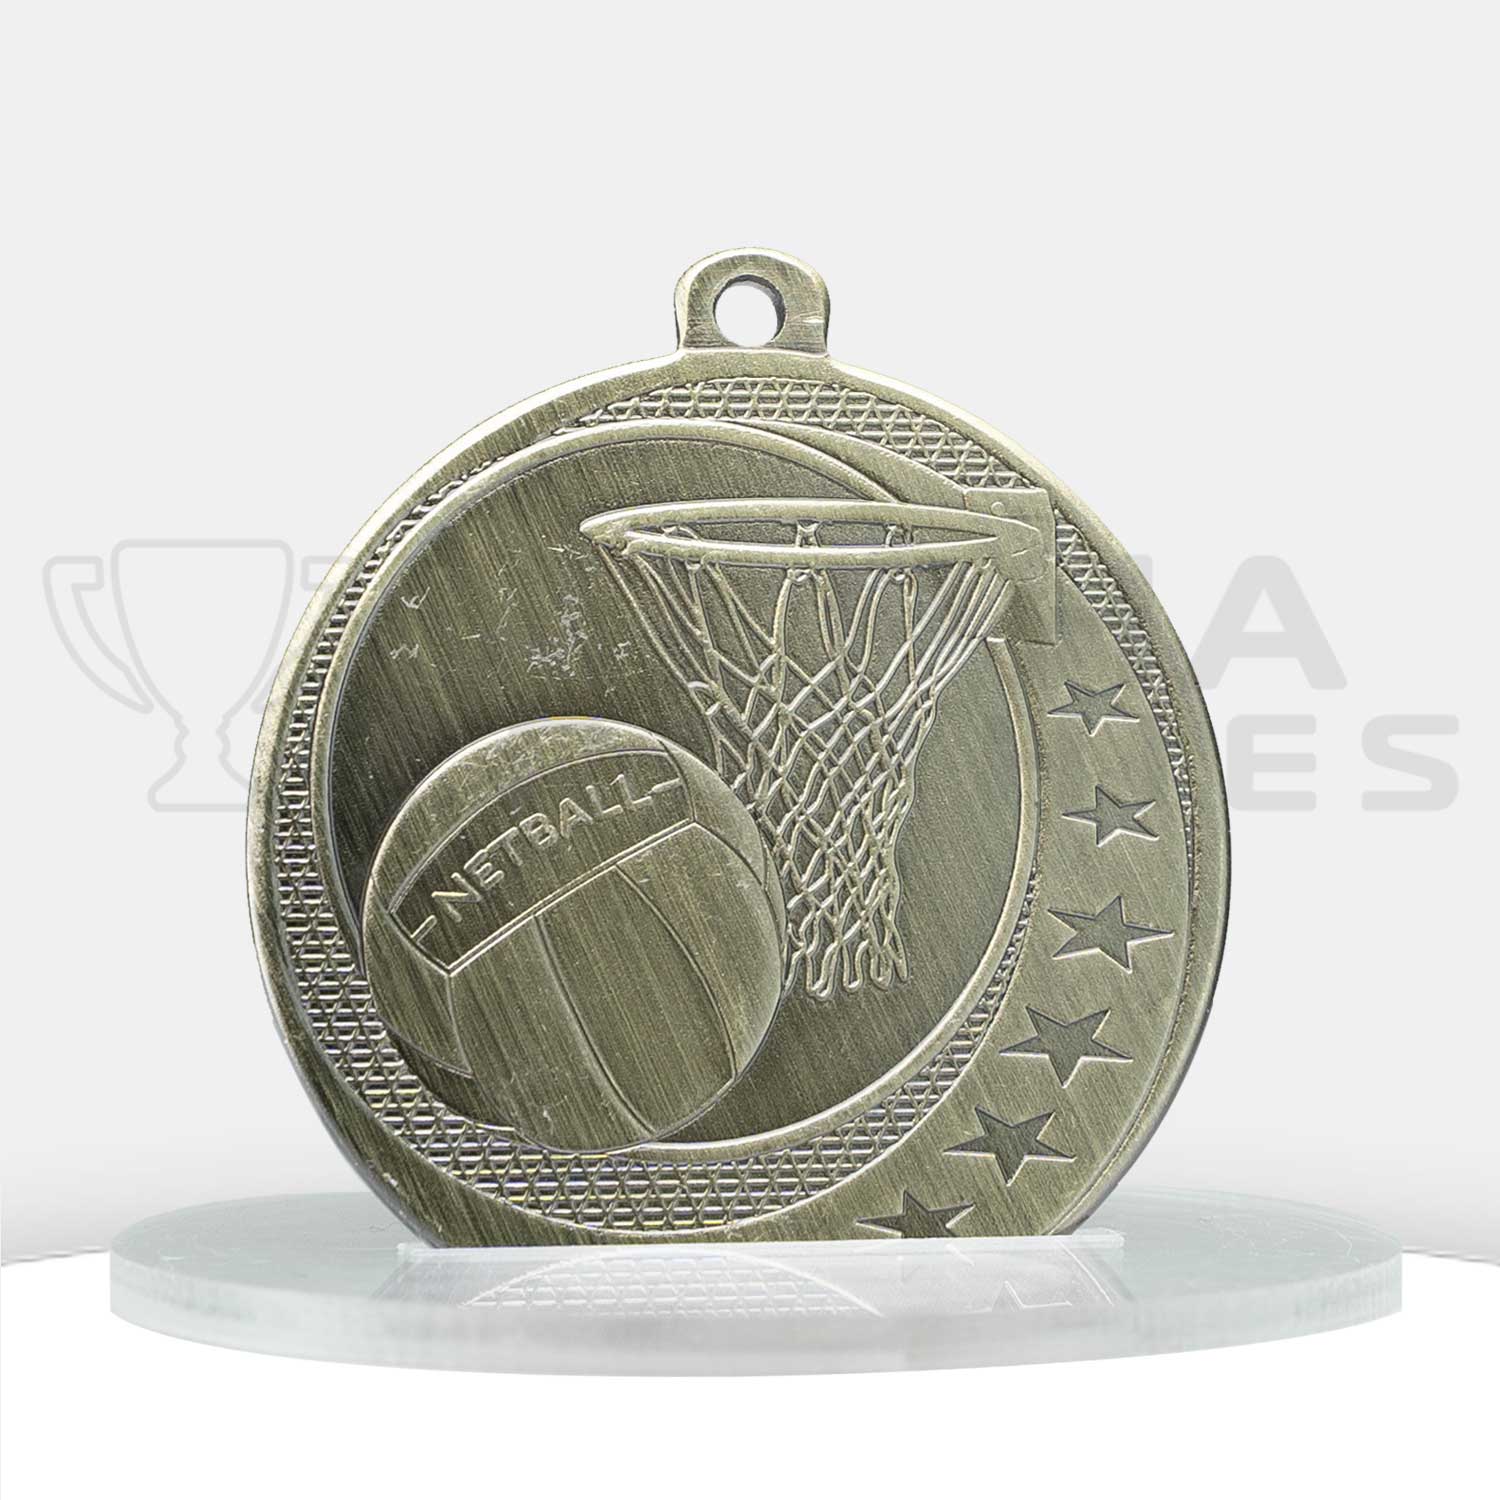 netball-wayfare-medal-gold-front